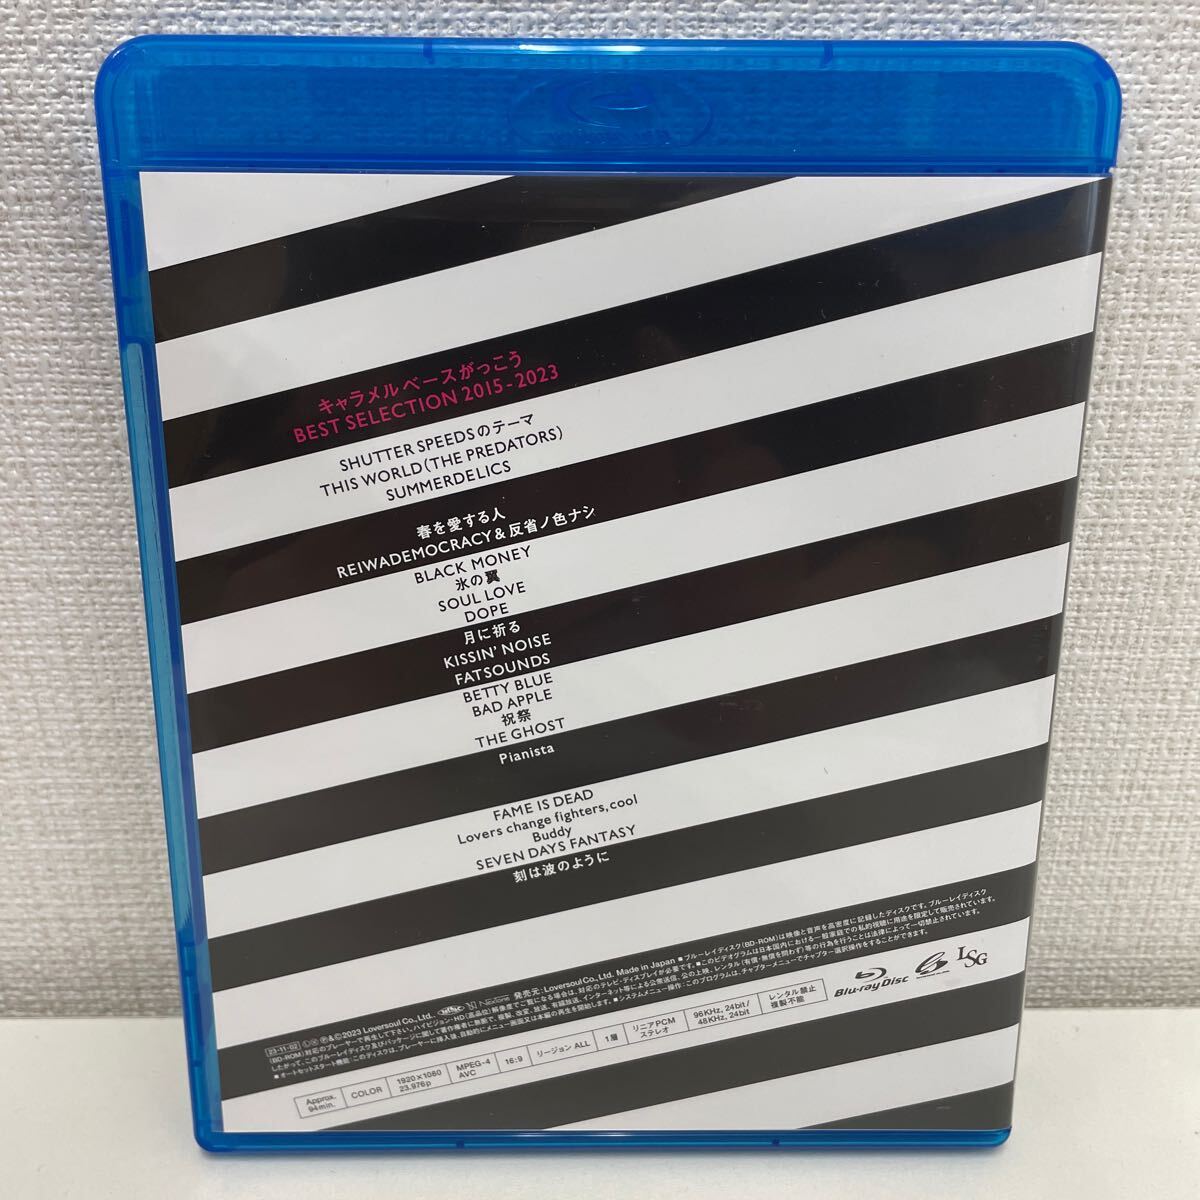 [1 иен старт ] GLAY JIRO CARAMEL RETURNS карамель основа ....Blu-ray серый 